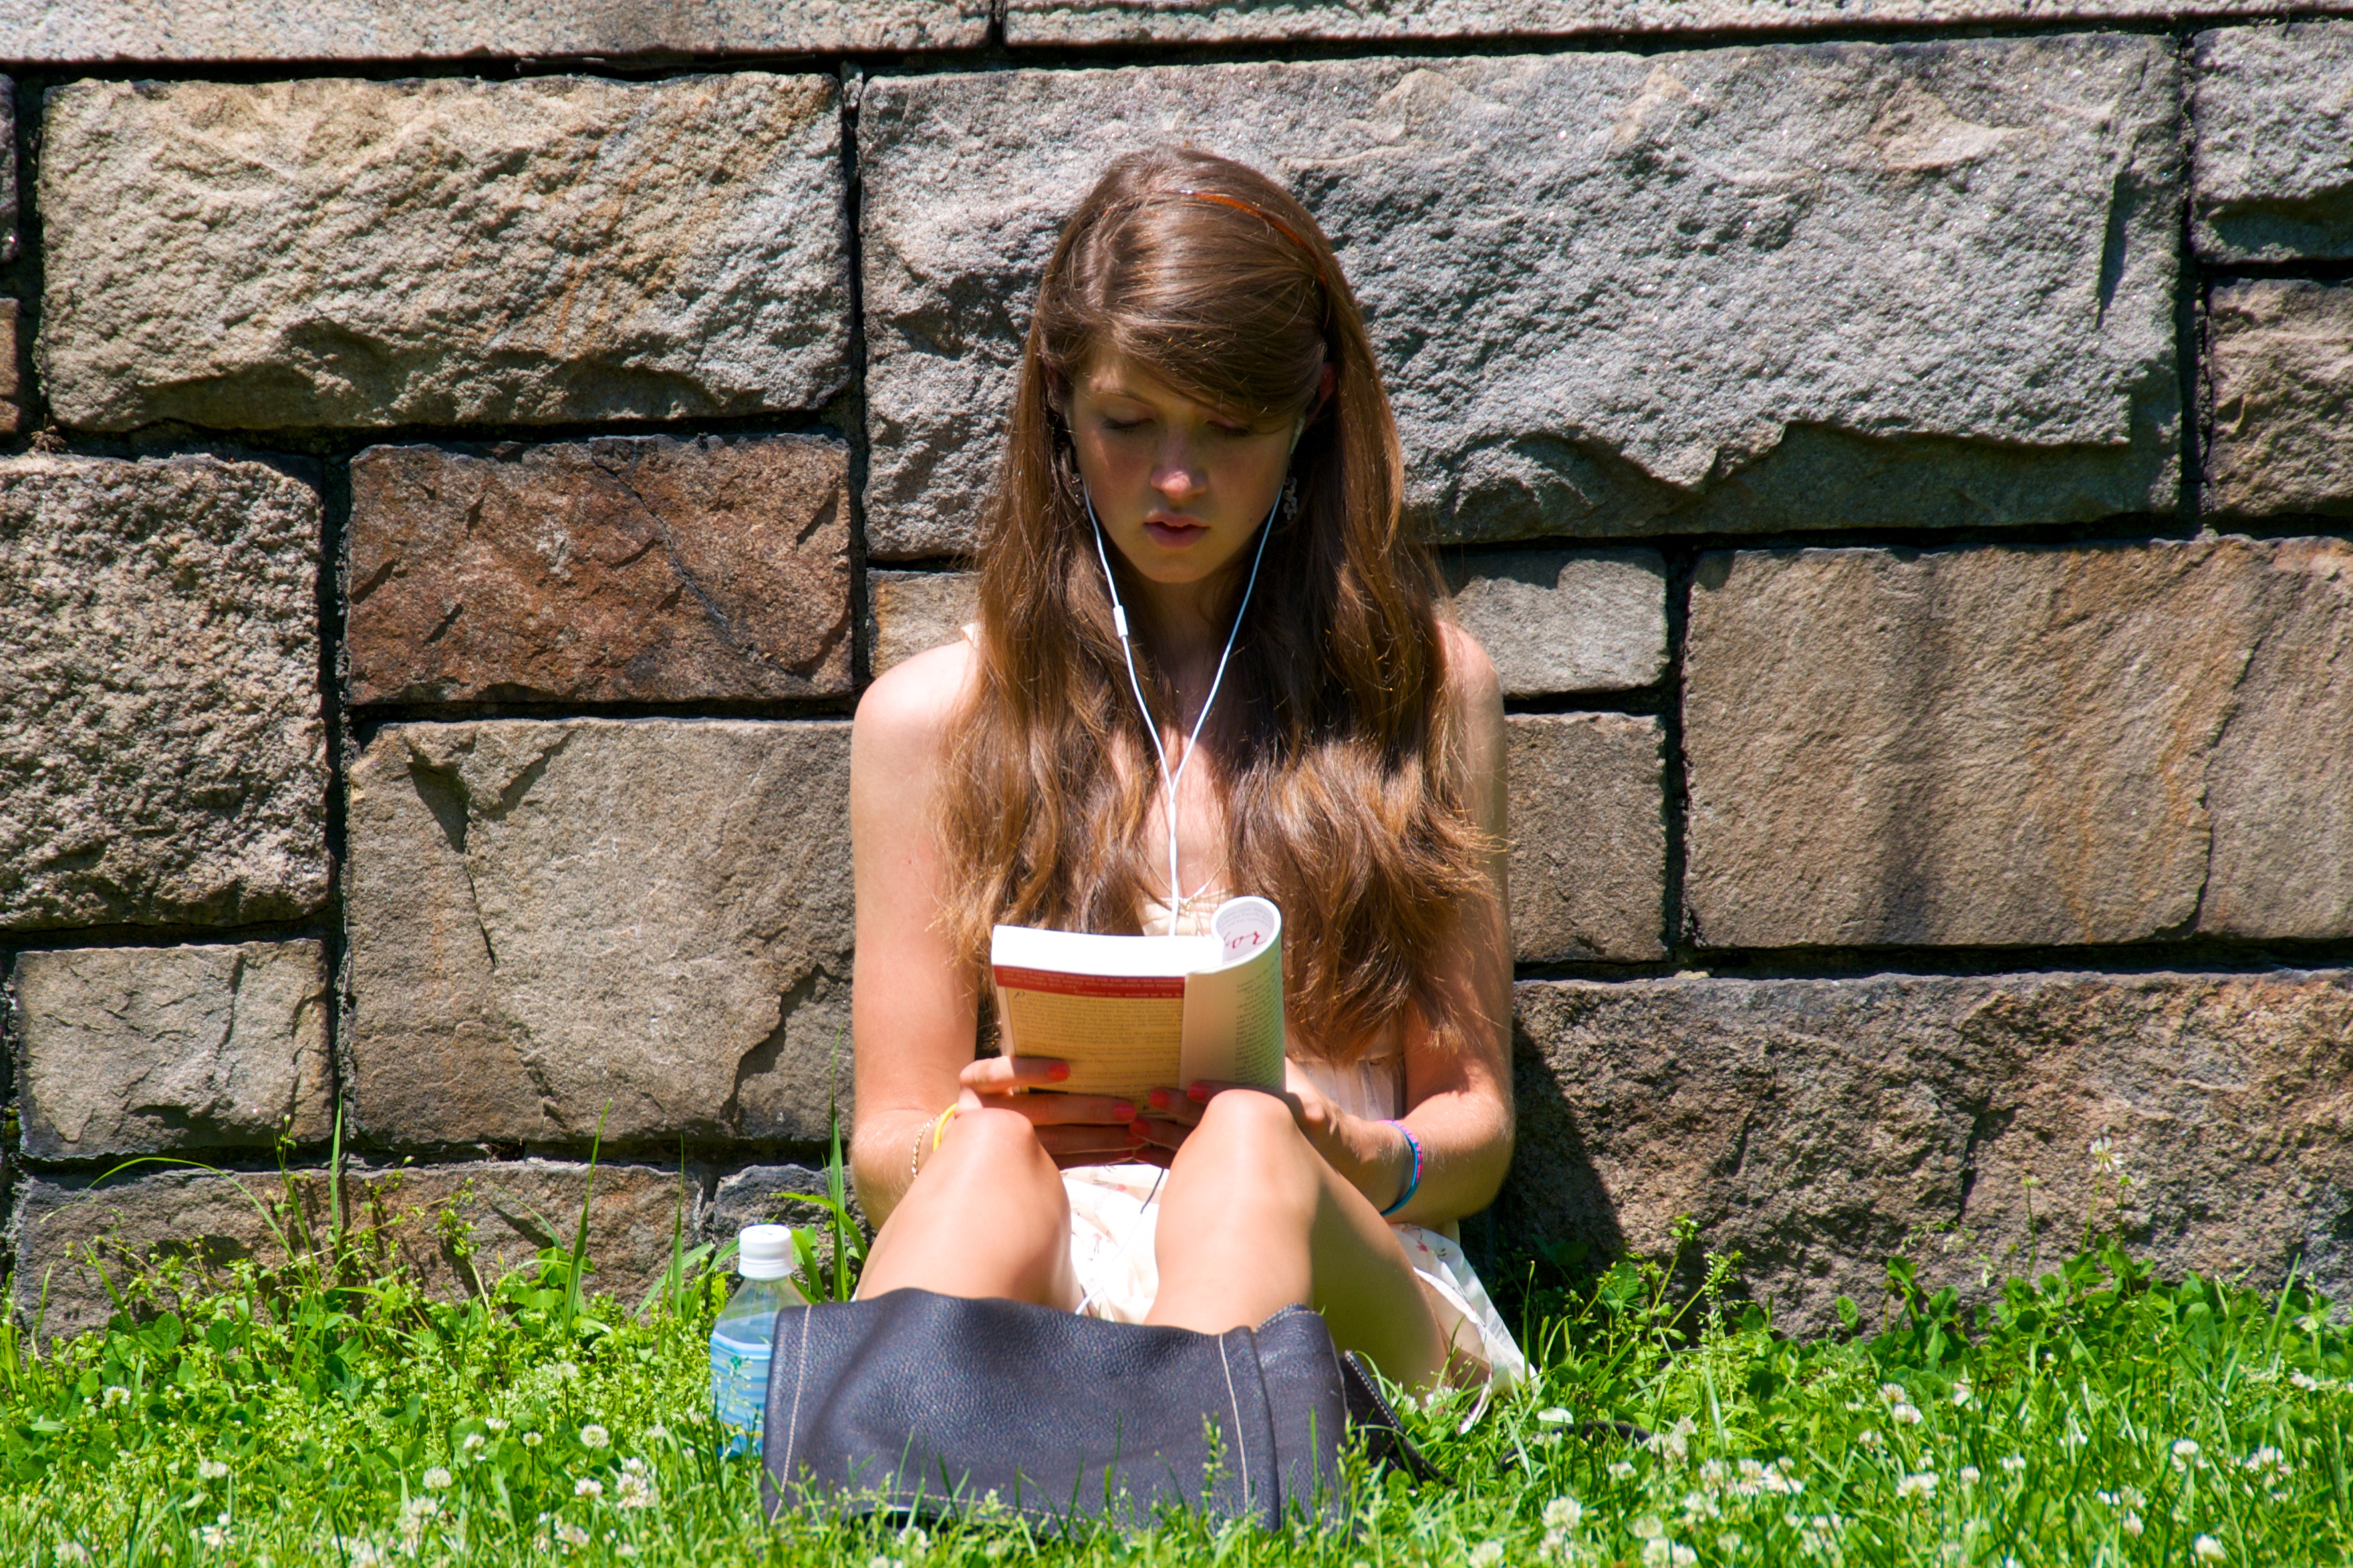 File:Cute girl reading outdoors.jpg - Wikimedia Commons